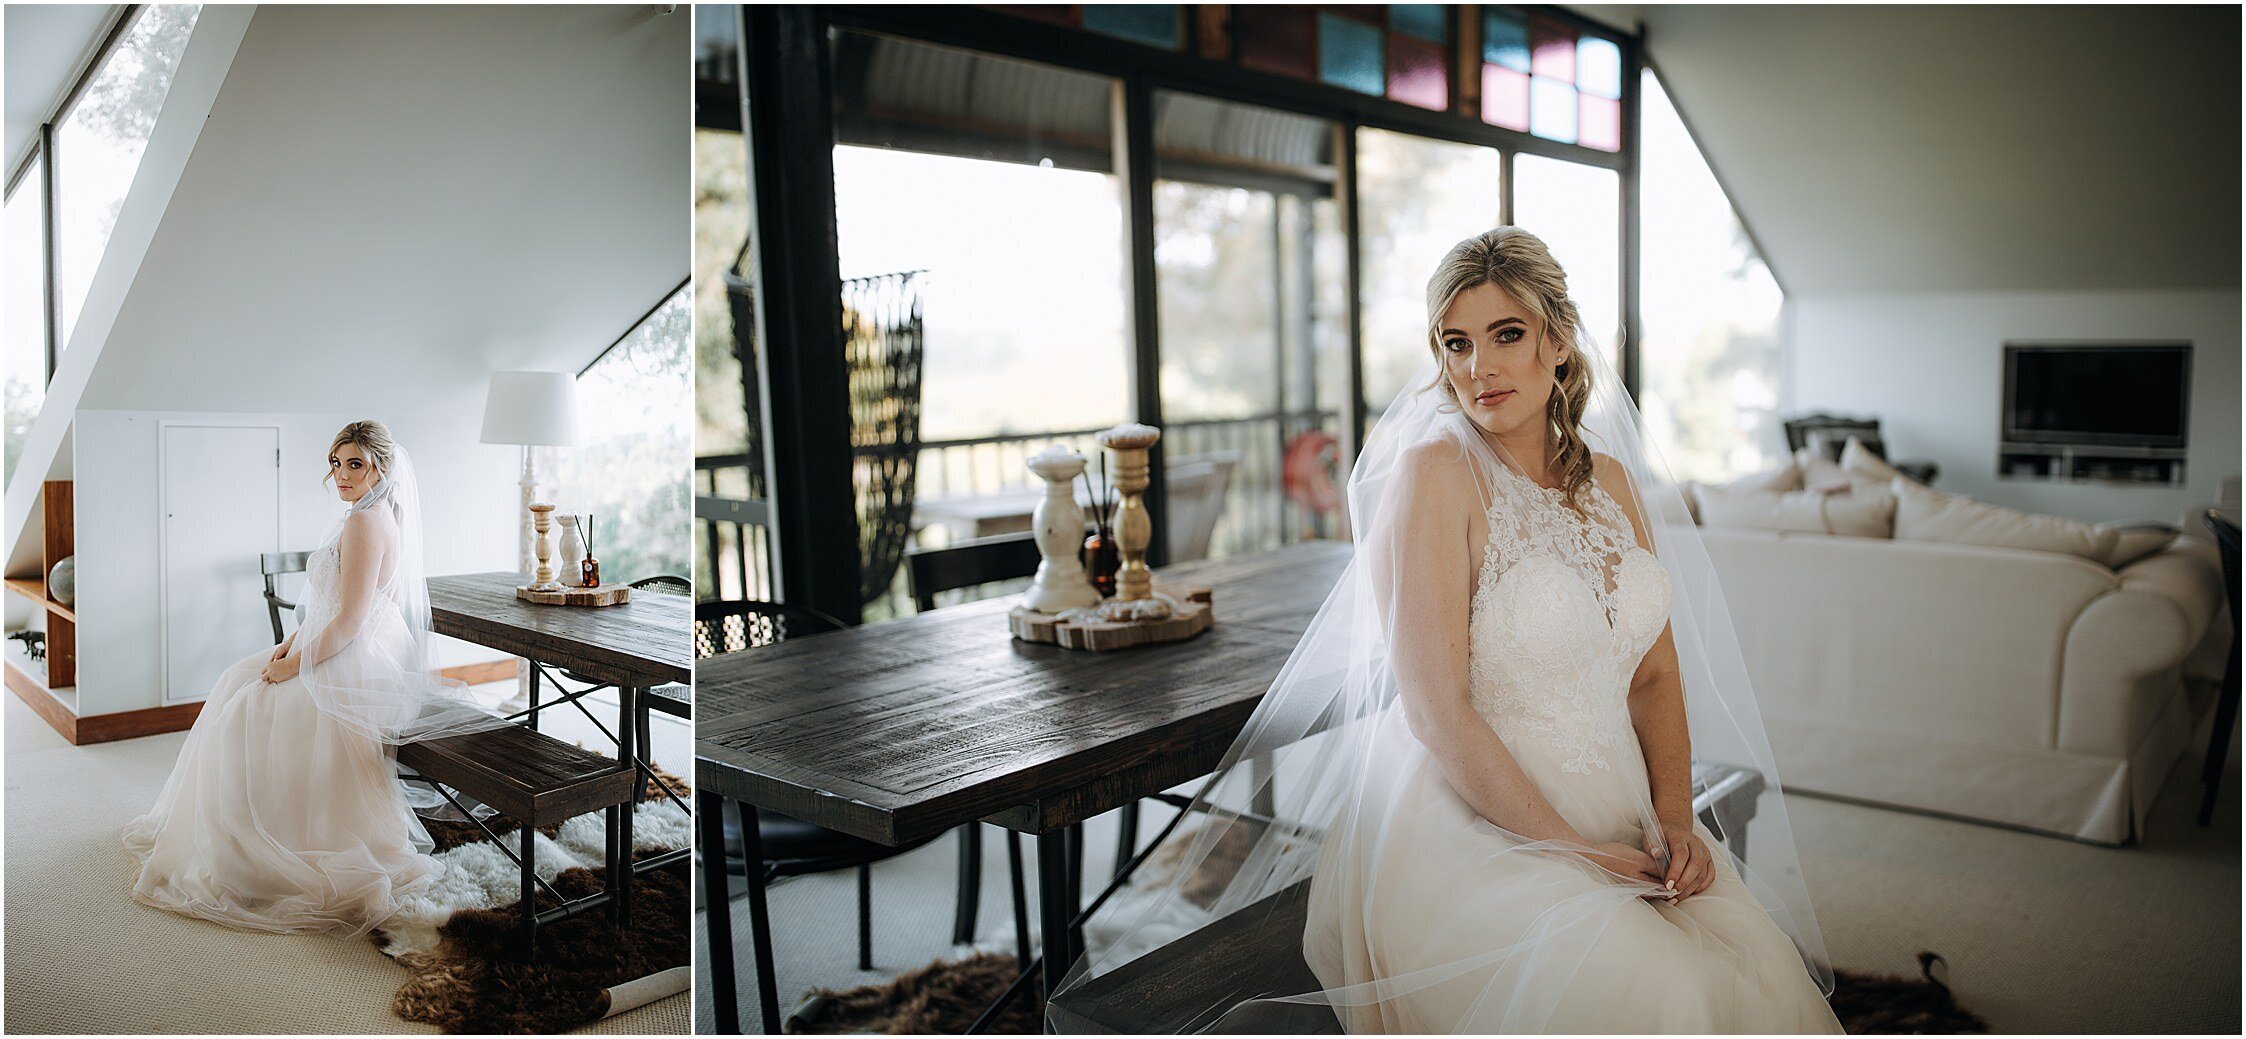 Zanda+Auckland+wedding+photographer+pregnant+bride+The+Narrows+Landing+venue+Hamilton+New+Zealand_22.jpeg